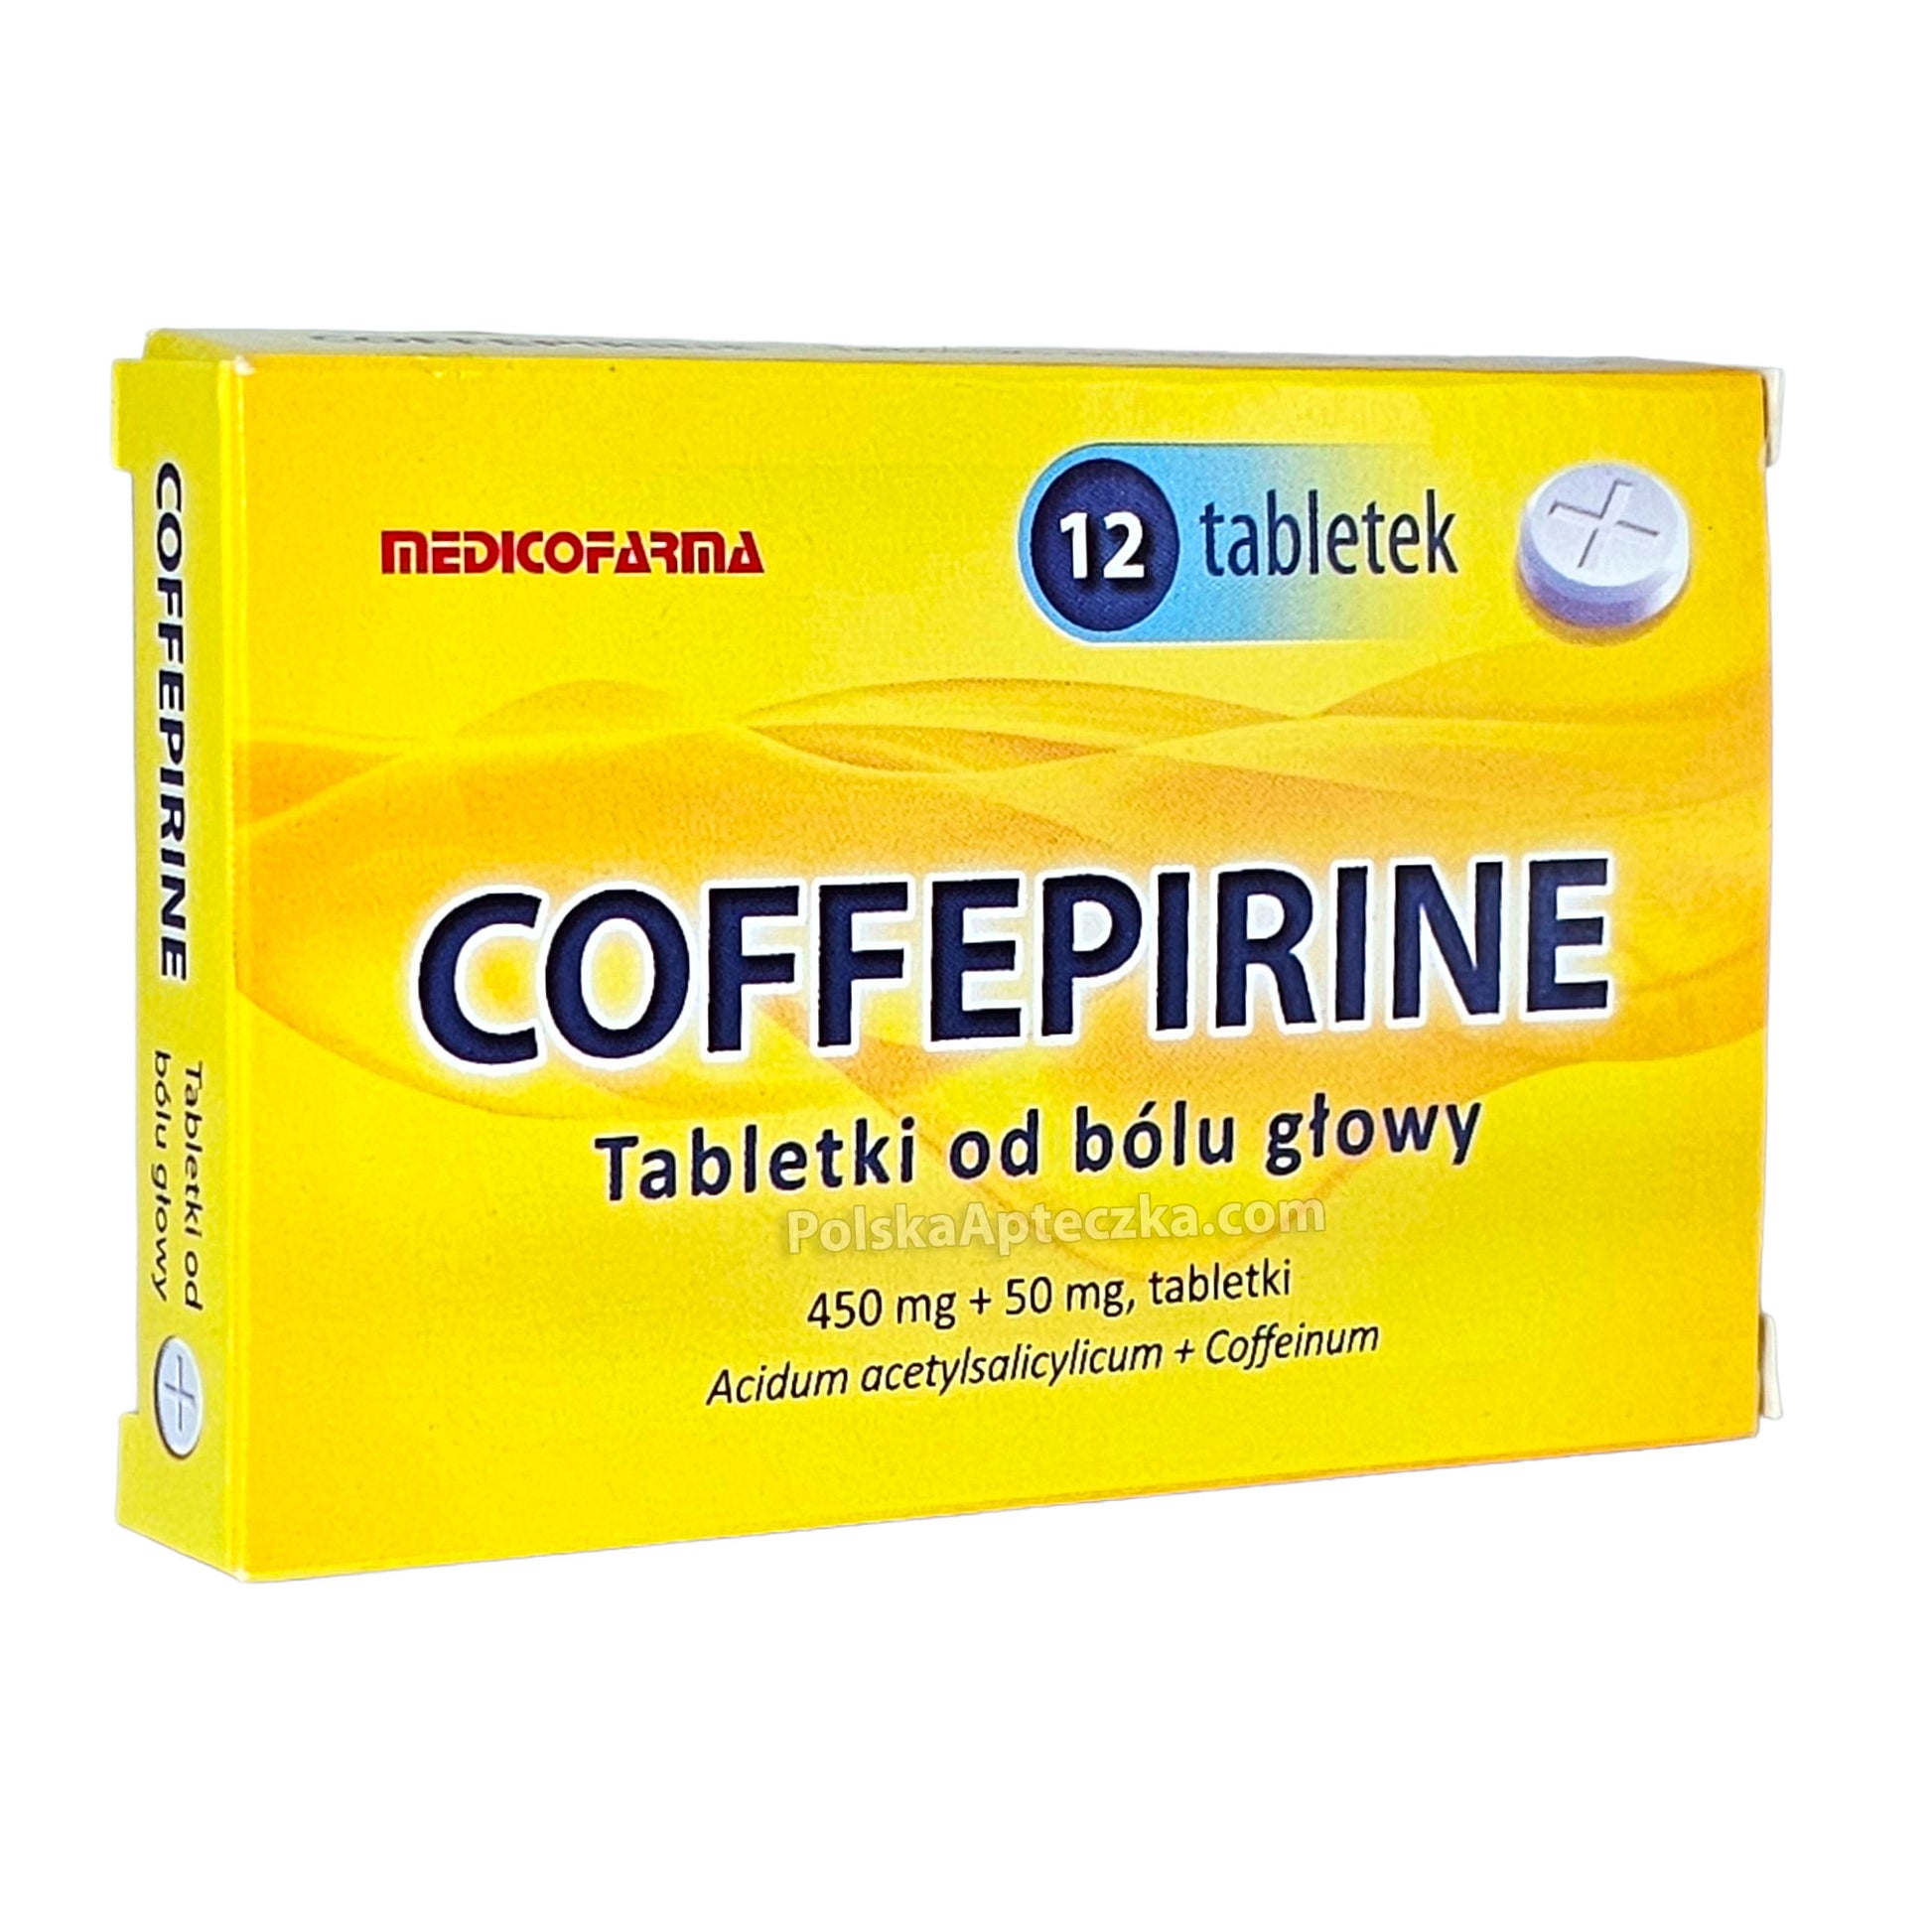 coffepirine tablets